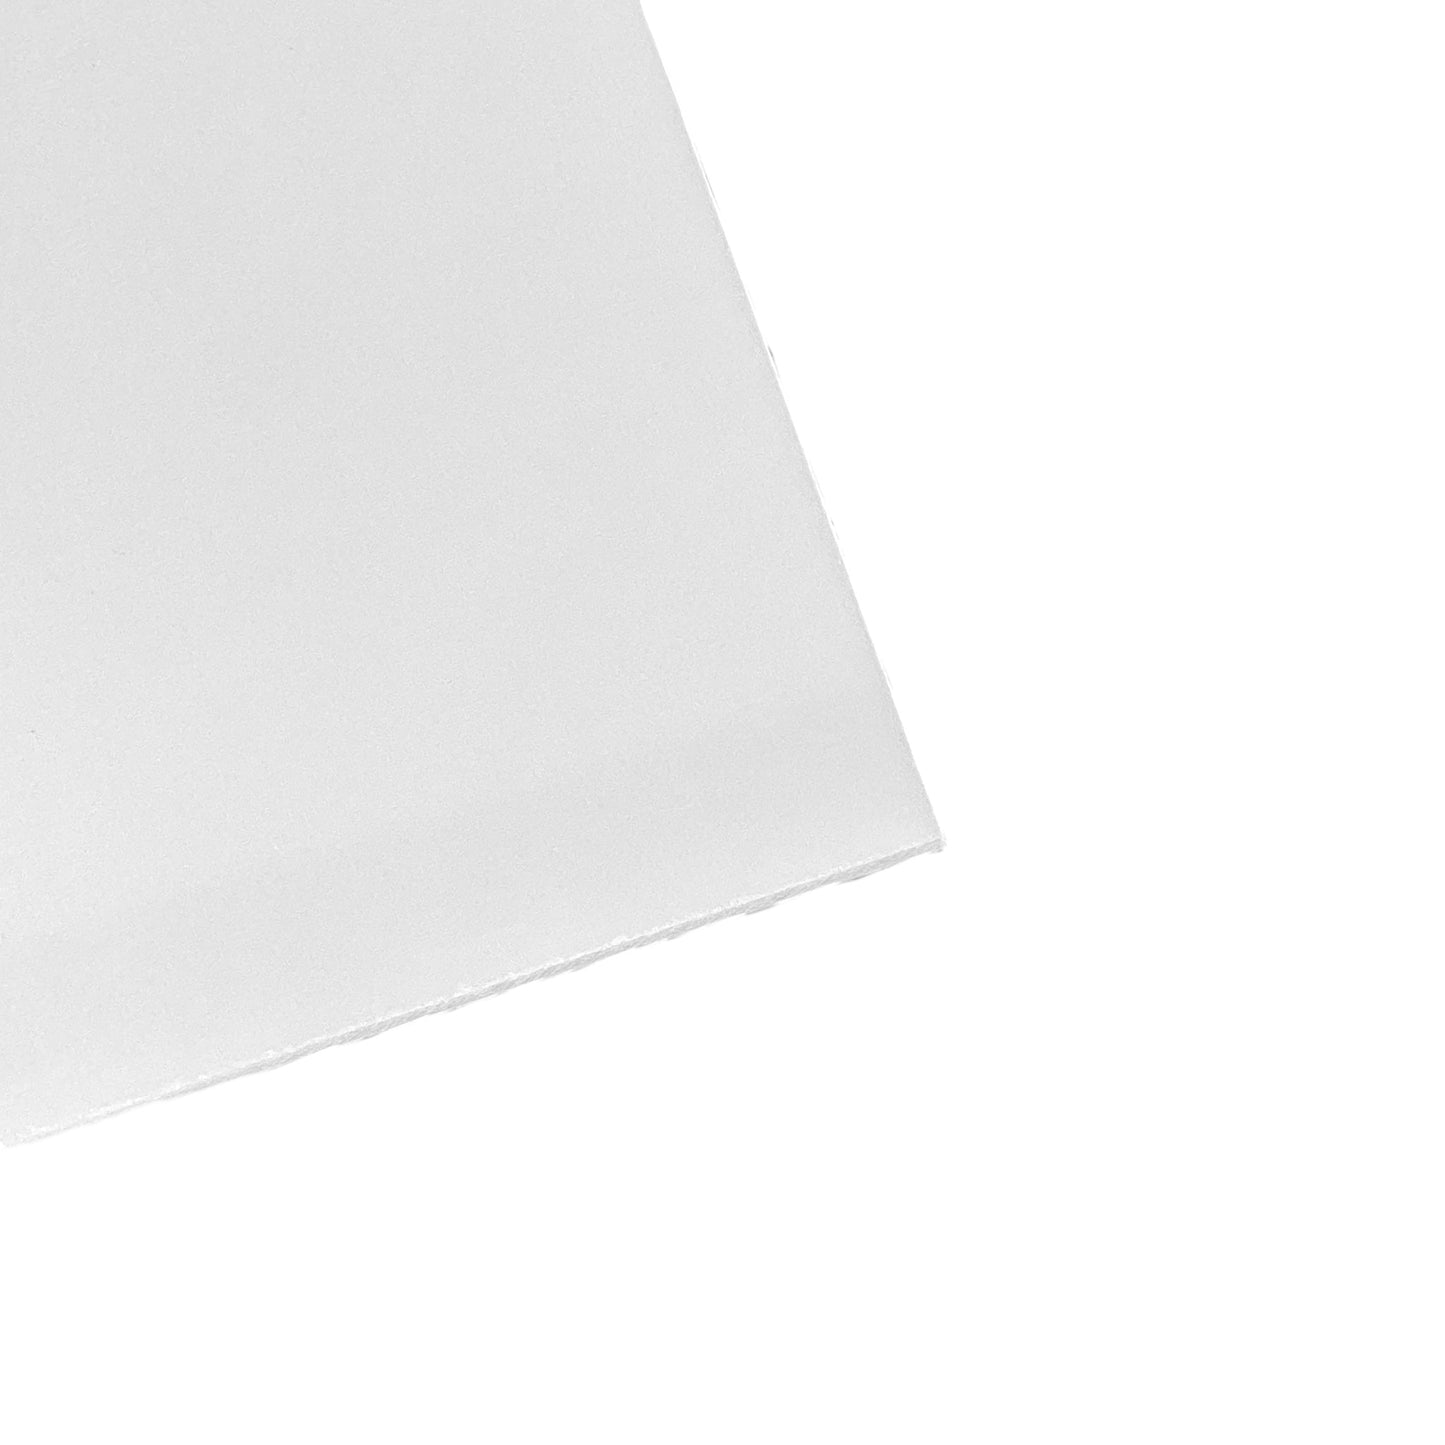 1/8" White Acrylic Sheets